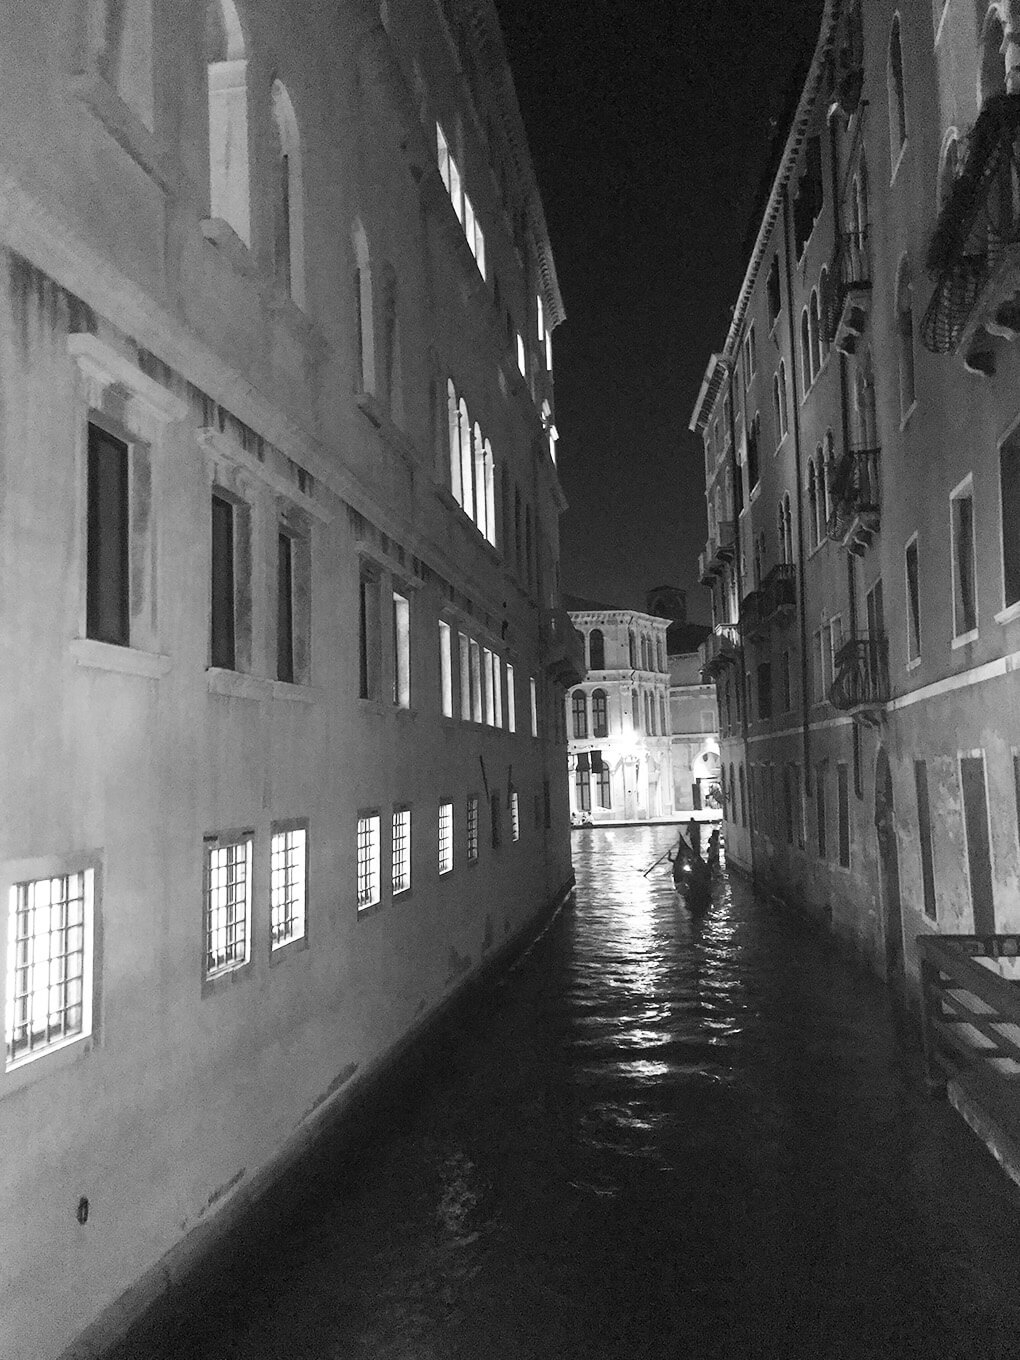 Foundation www.sarahkayhoffman.com Venice at night #italy #travel #lifestyleblogger #newhouse